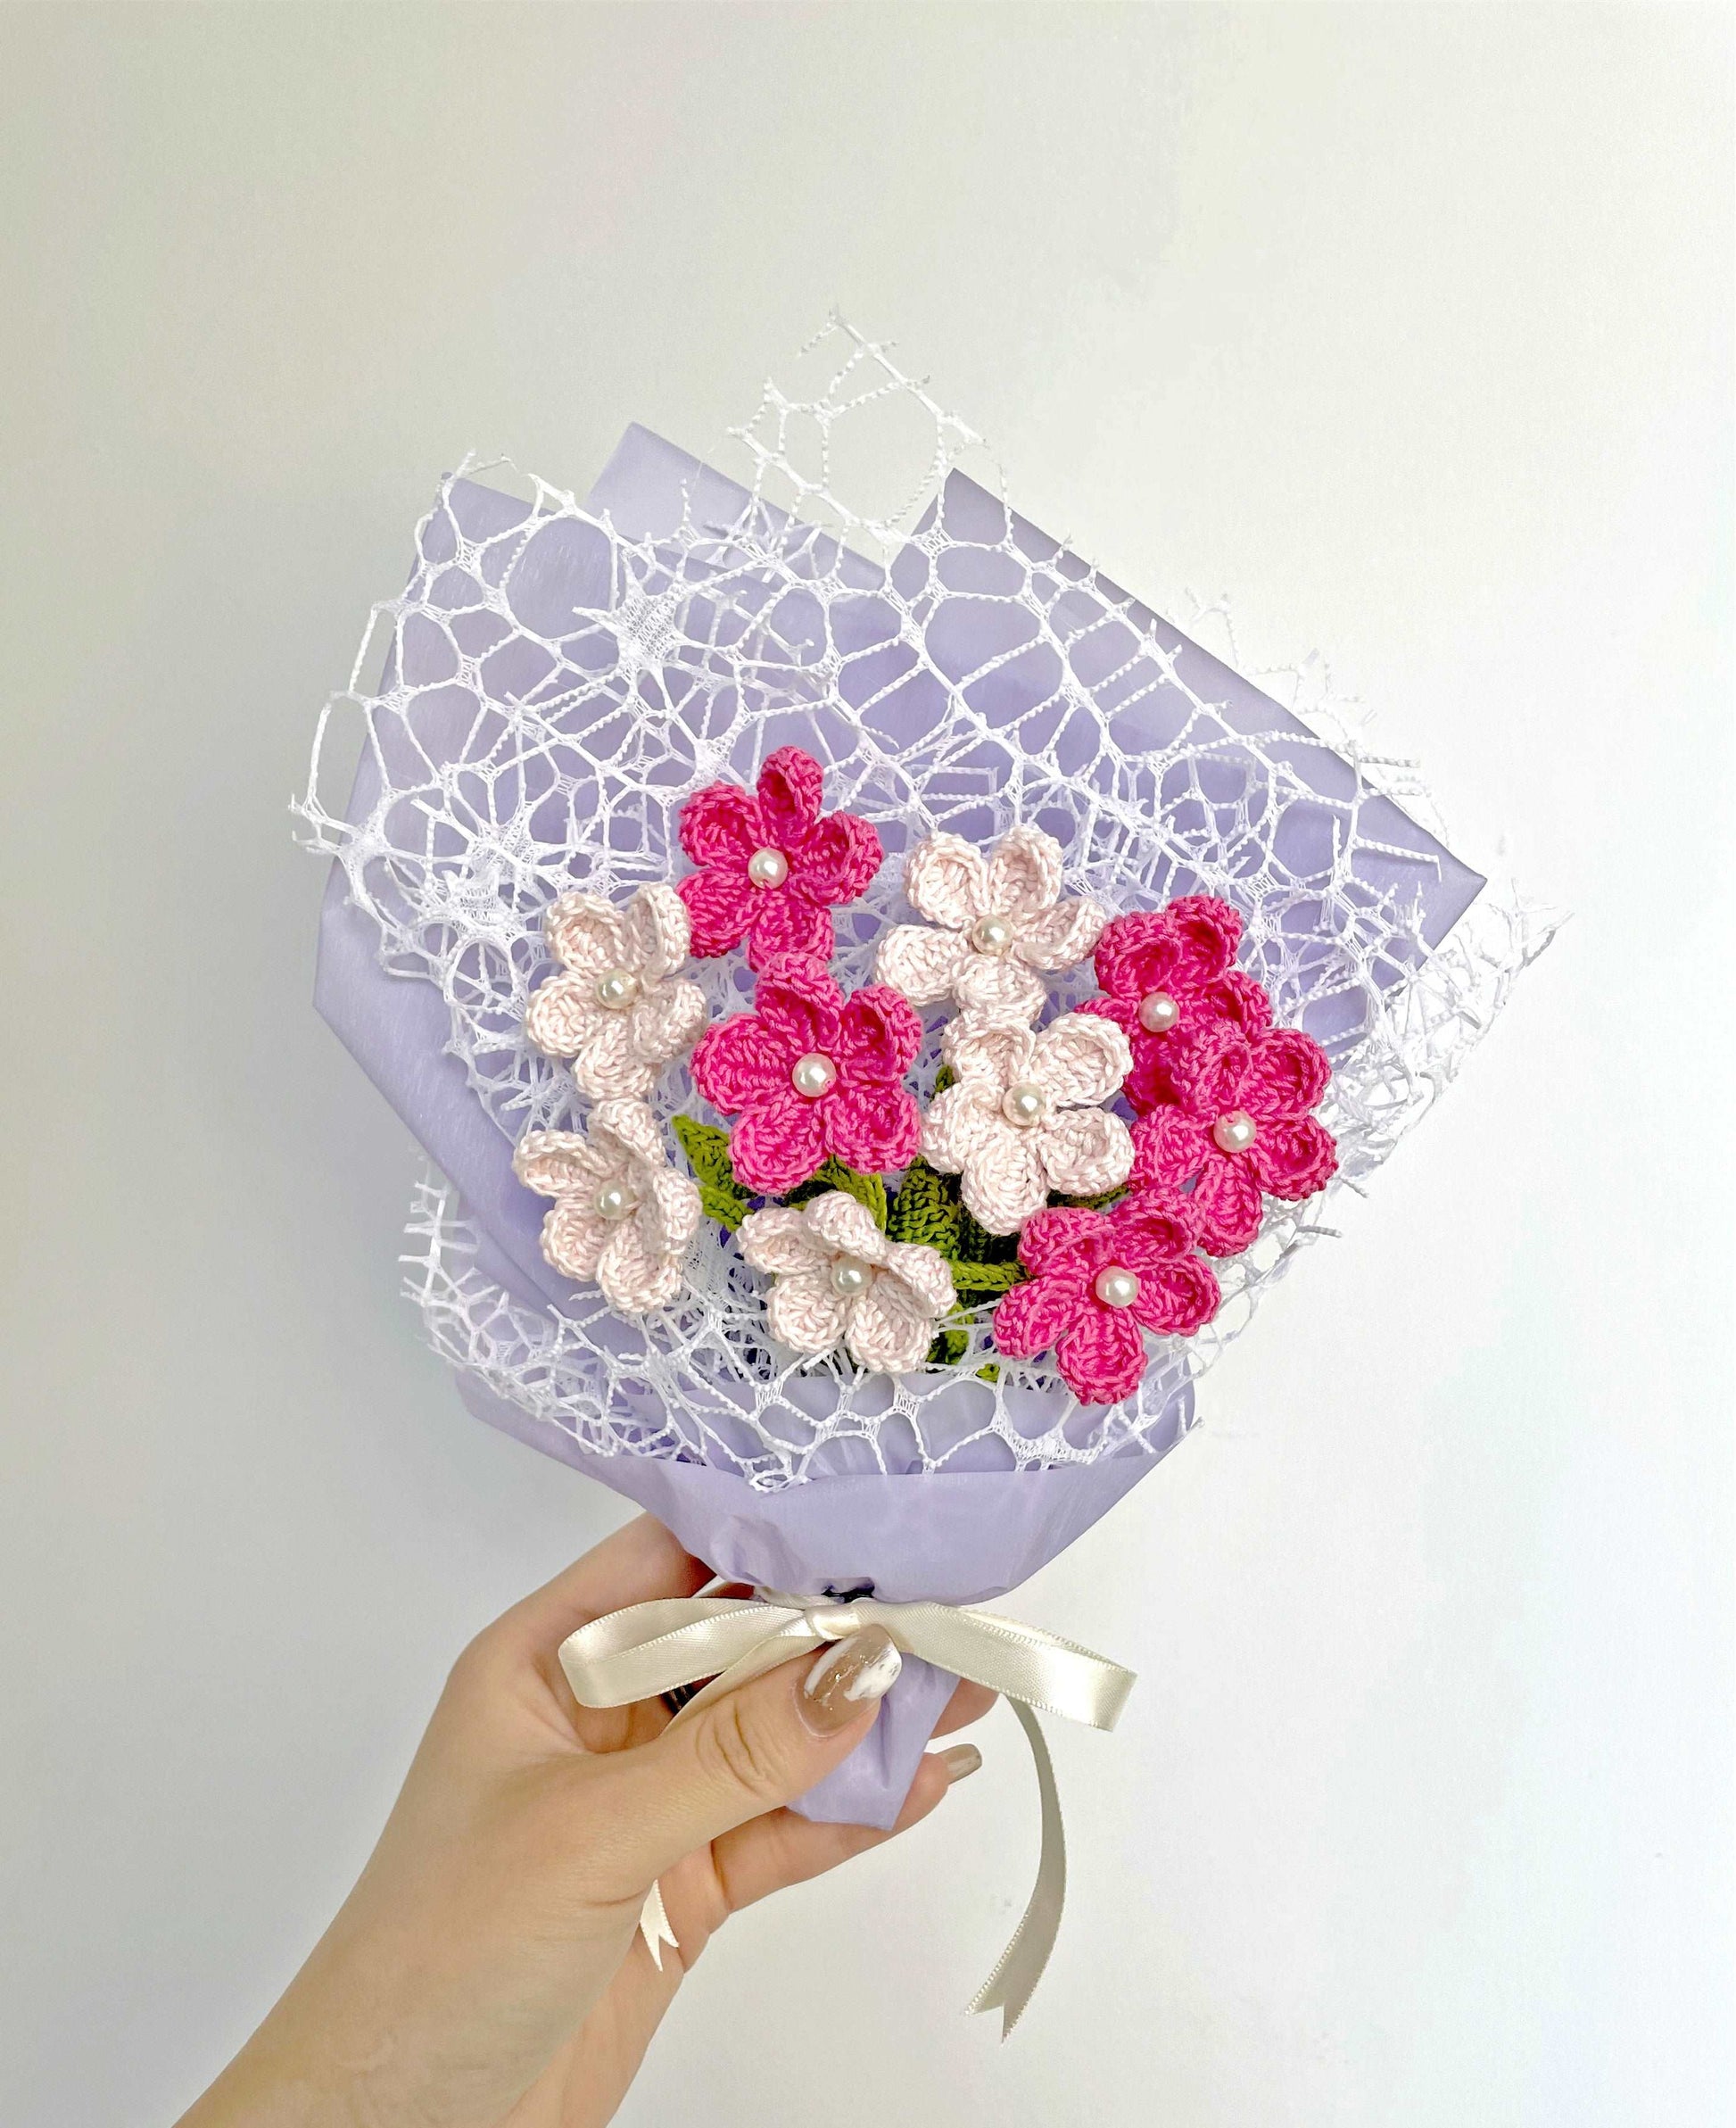 Artisanal Handcrafted Pink Flower Arrangement